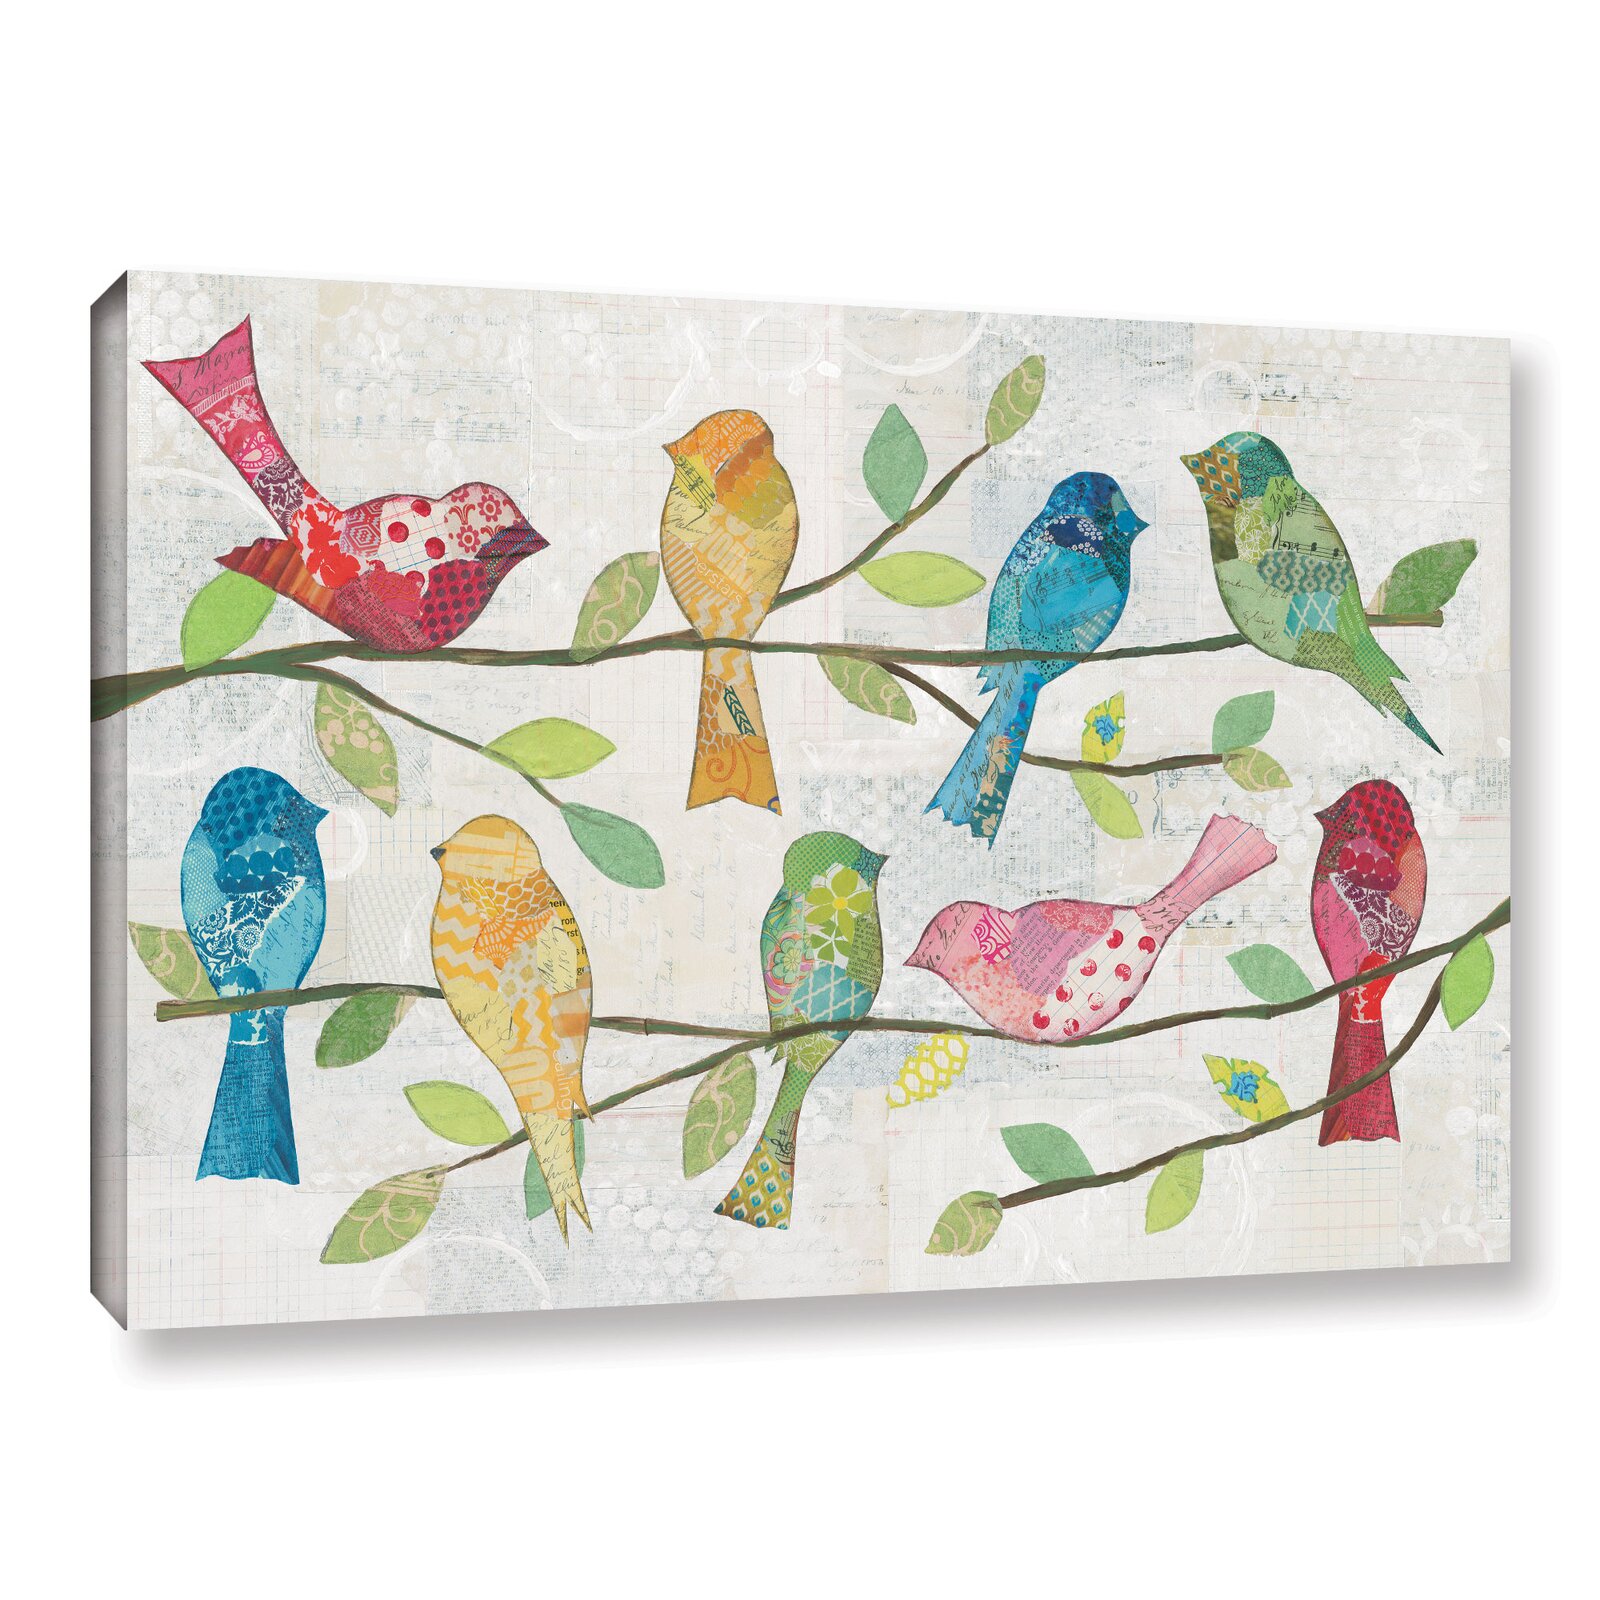 Bird Wall Decorations - 'Catching up VI' - Print